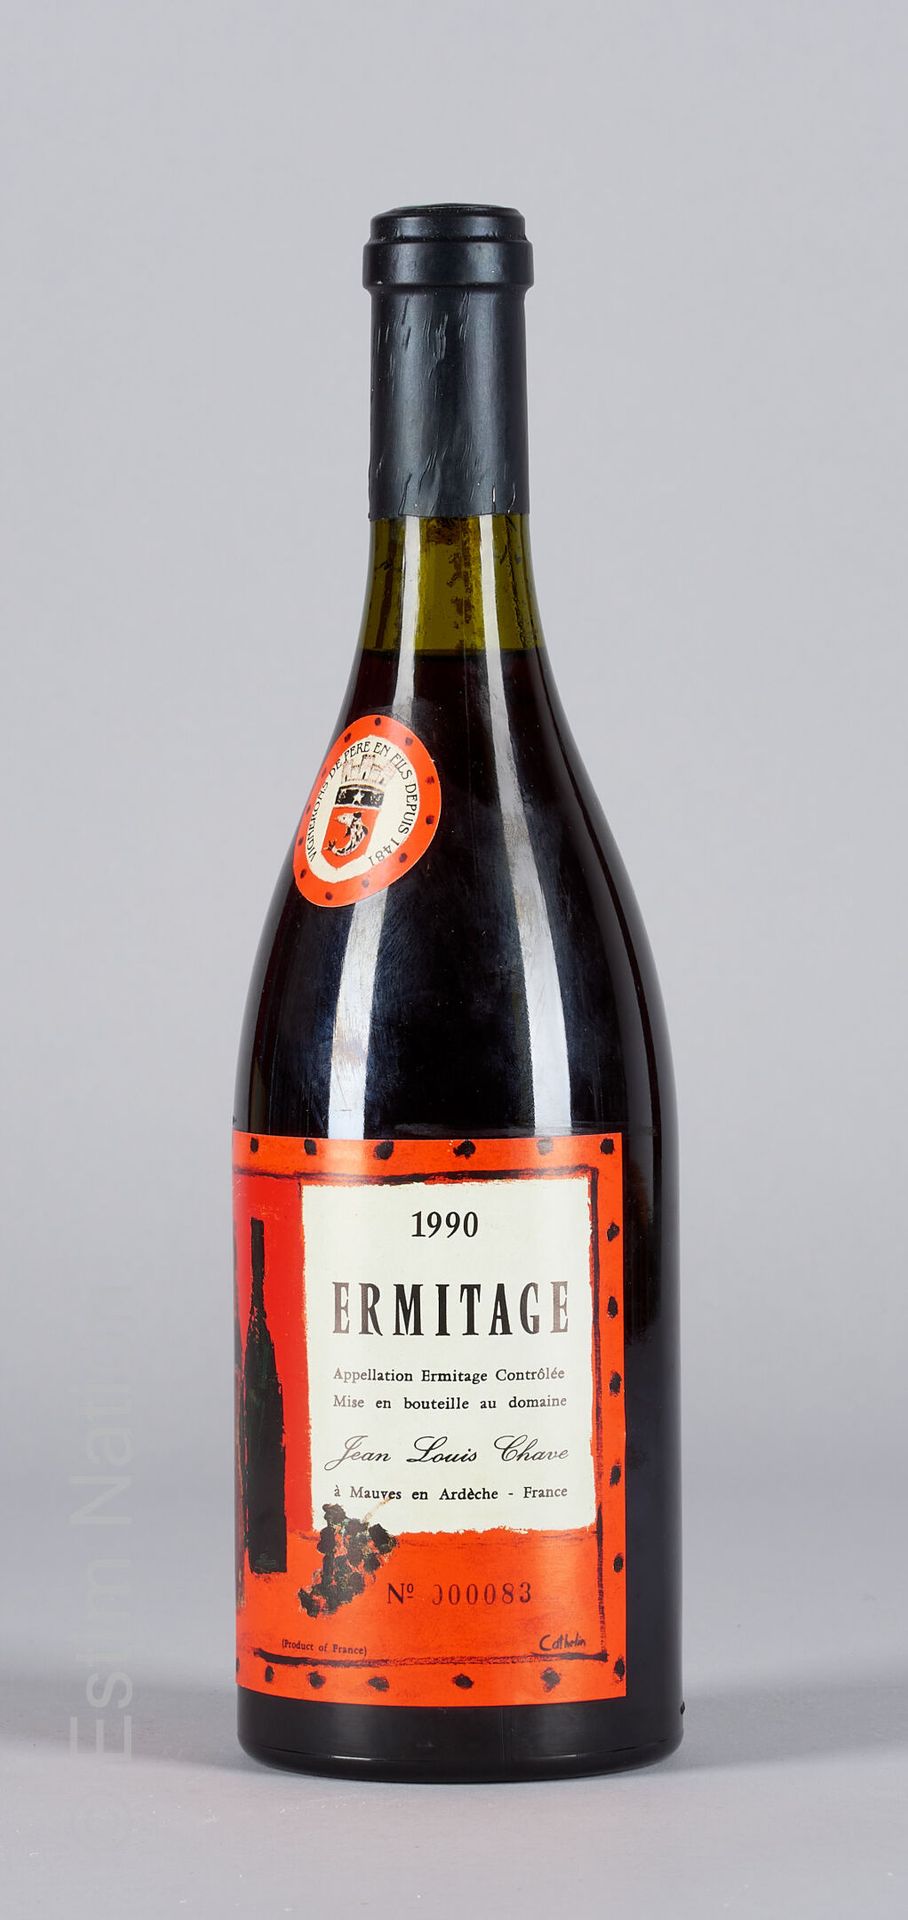 CUVEE CATHELIN 1 bottiglia ERMITAGE 1990 Cuvée Cathelin Jean-Louis Chave

(N. Tr&hellip;